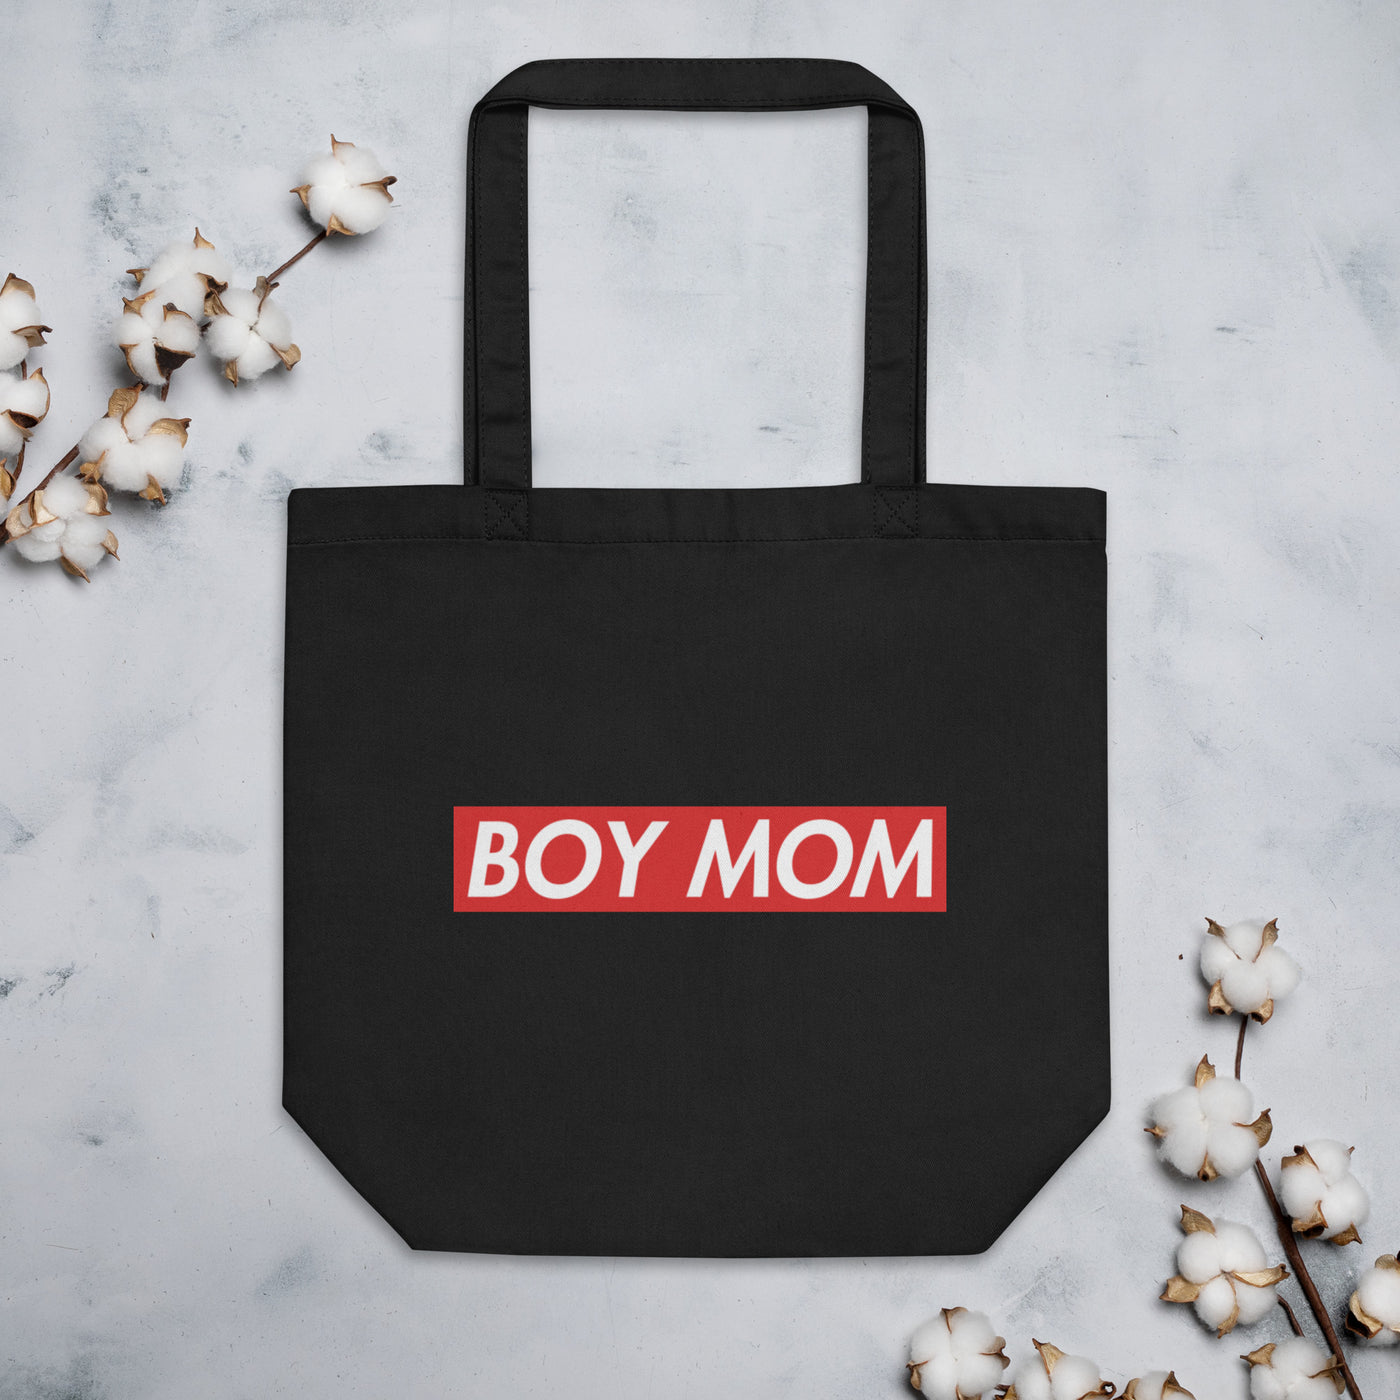 Modern Mom Bag 